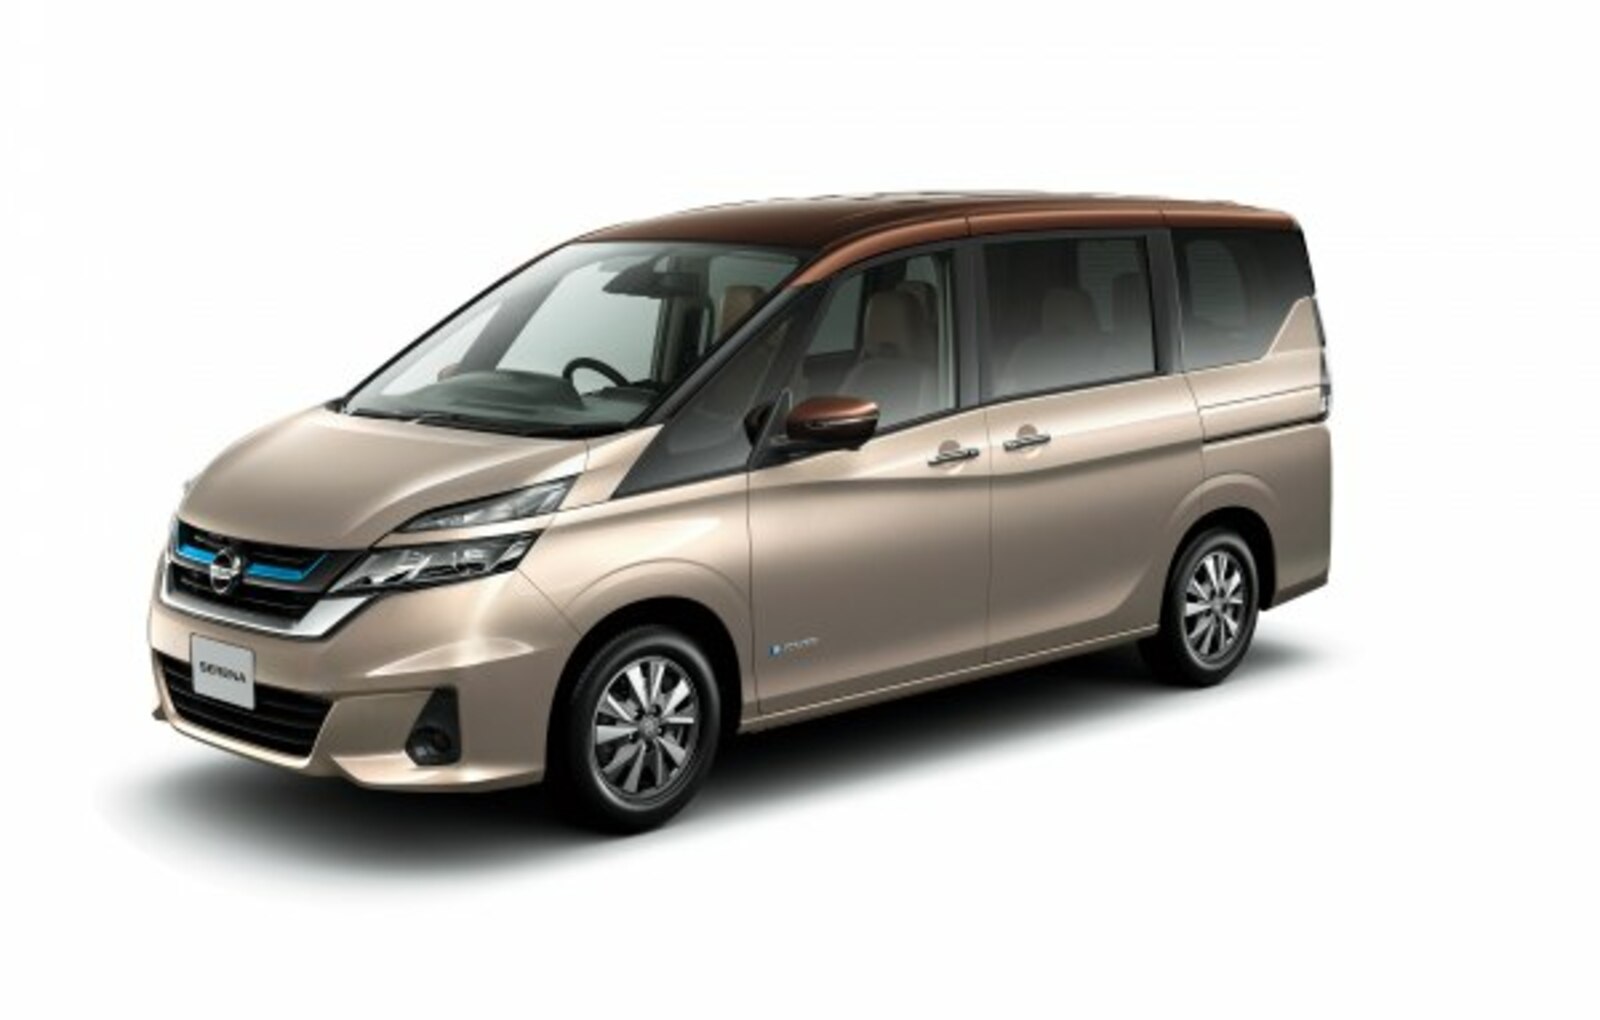 Nissan Serena (C27) 2.0 (150 Hp) S-Hybrid AWD CVT 2016, 2017, 2018, 2019, 2020, 2021 